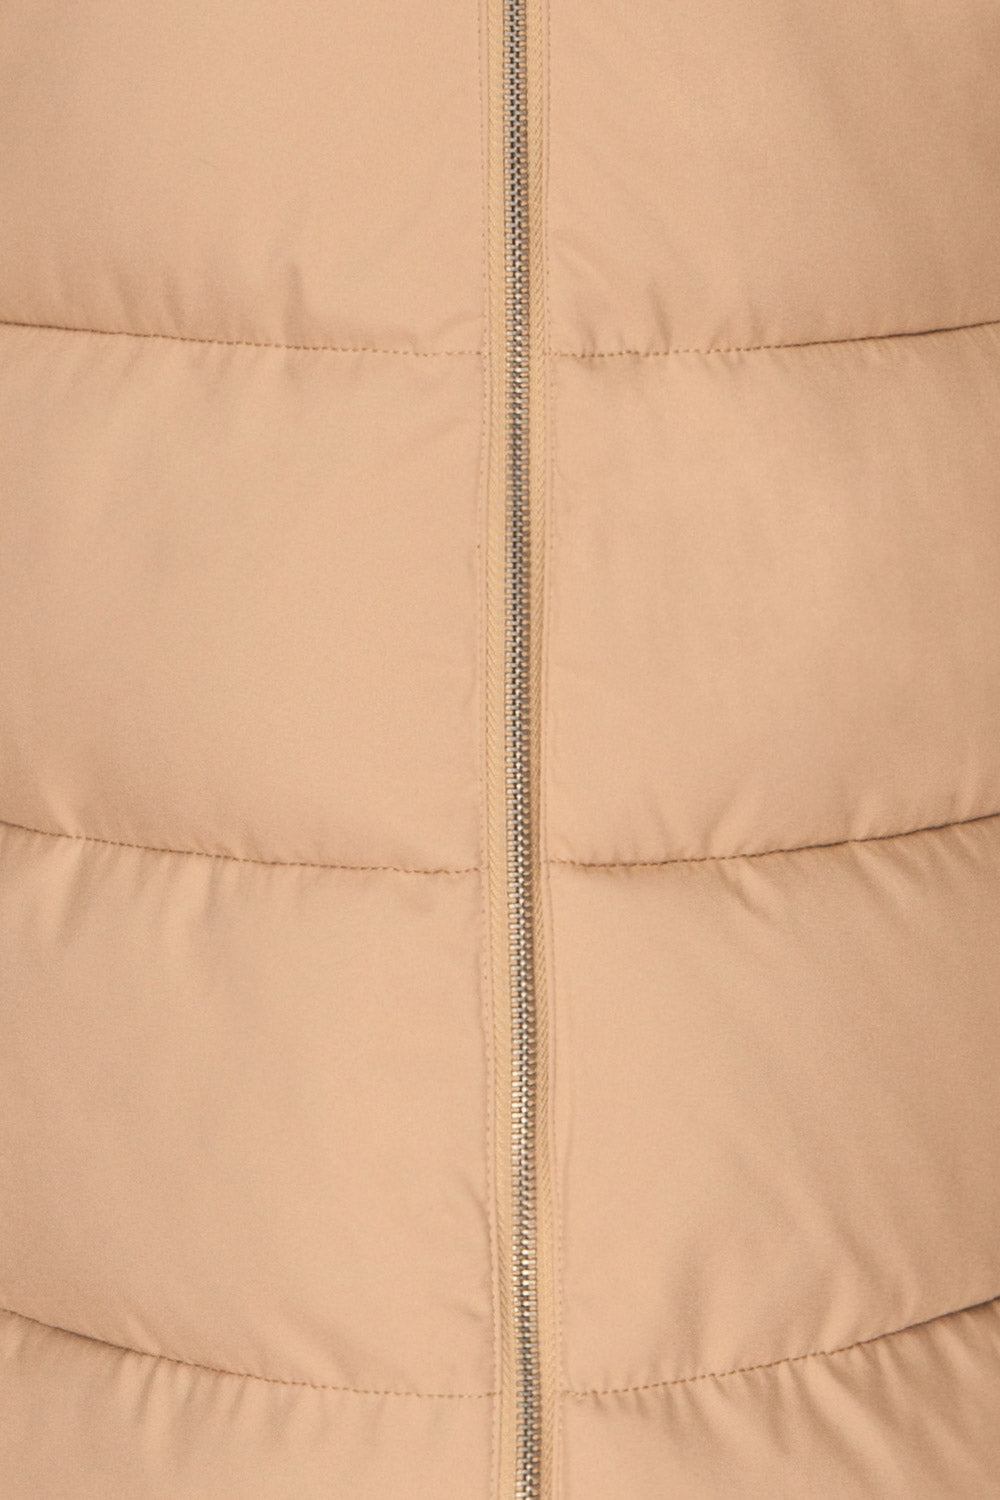 Joukovski Beige Hooded Quilted Parka | La Petite Garçonne fabric detail 